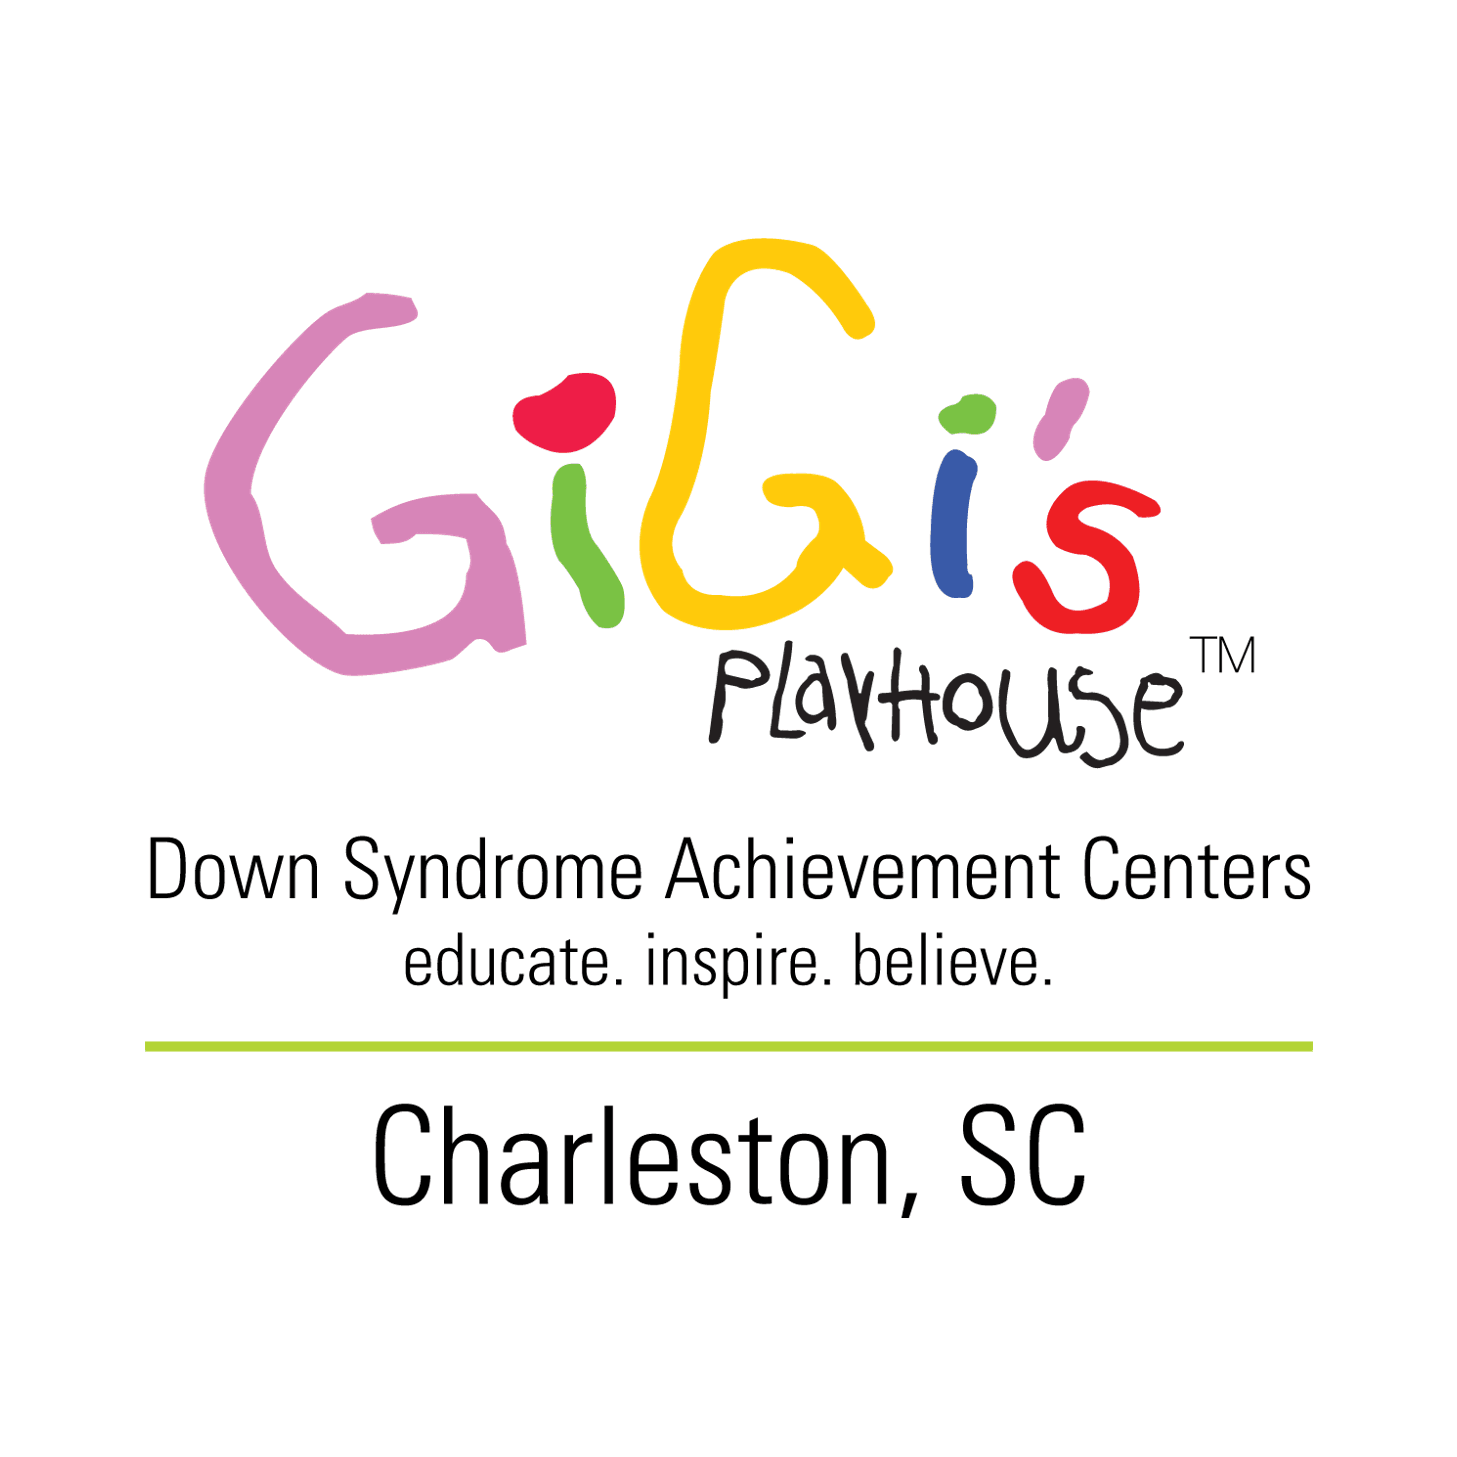 GiGi's Playhouse is coming to Charleston!